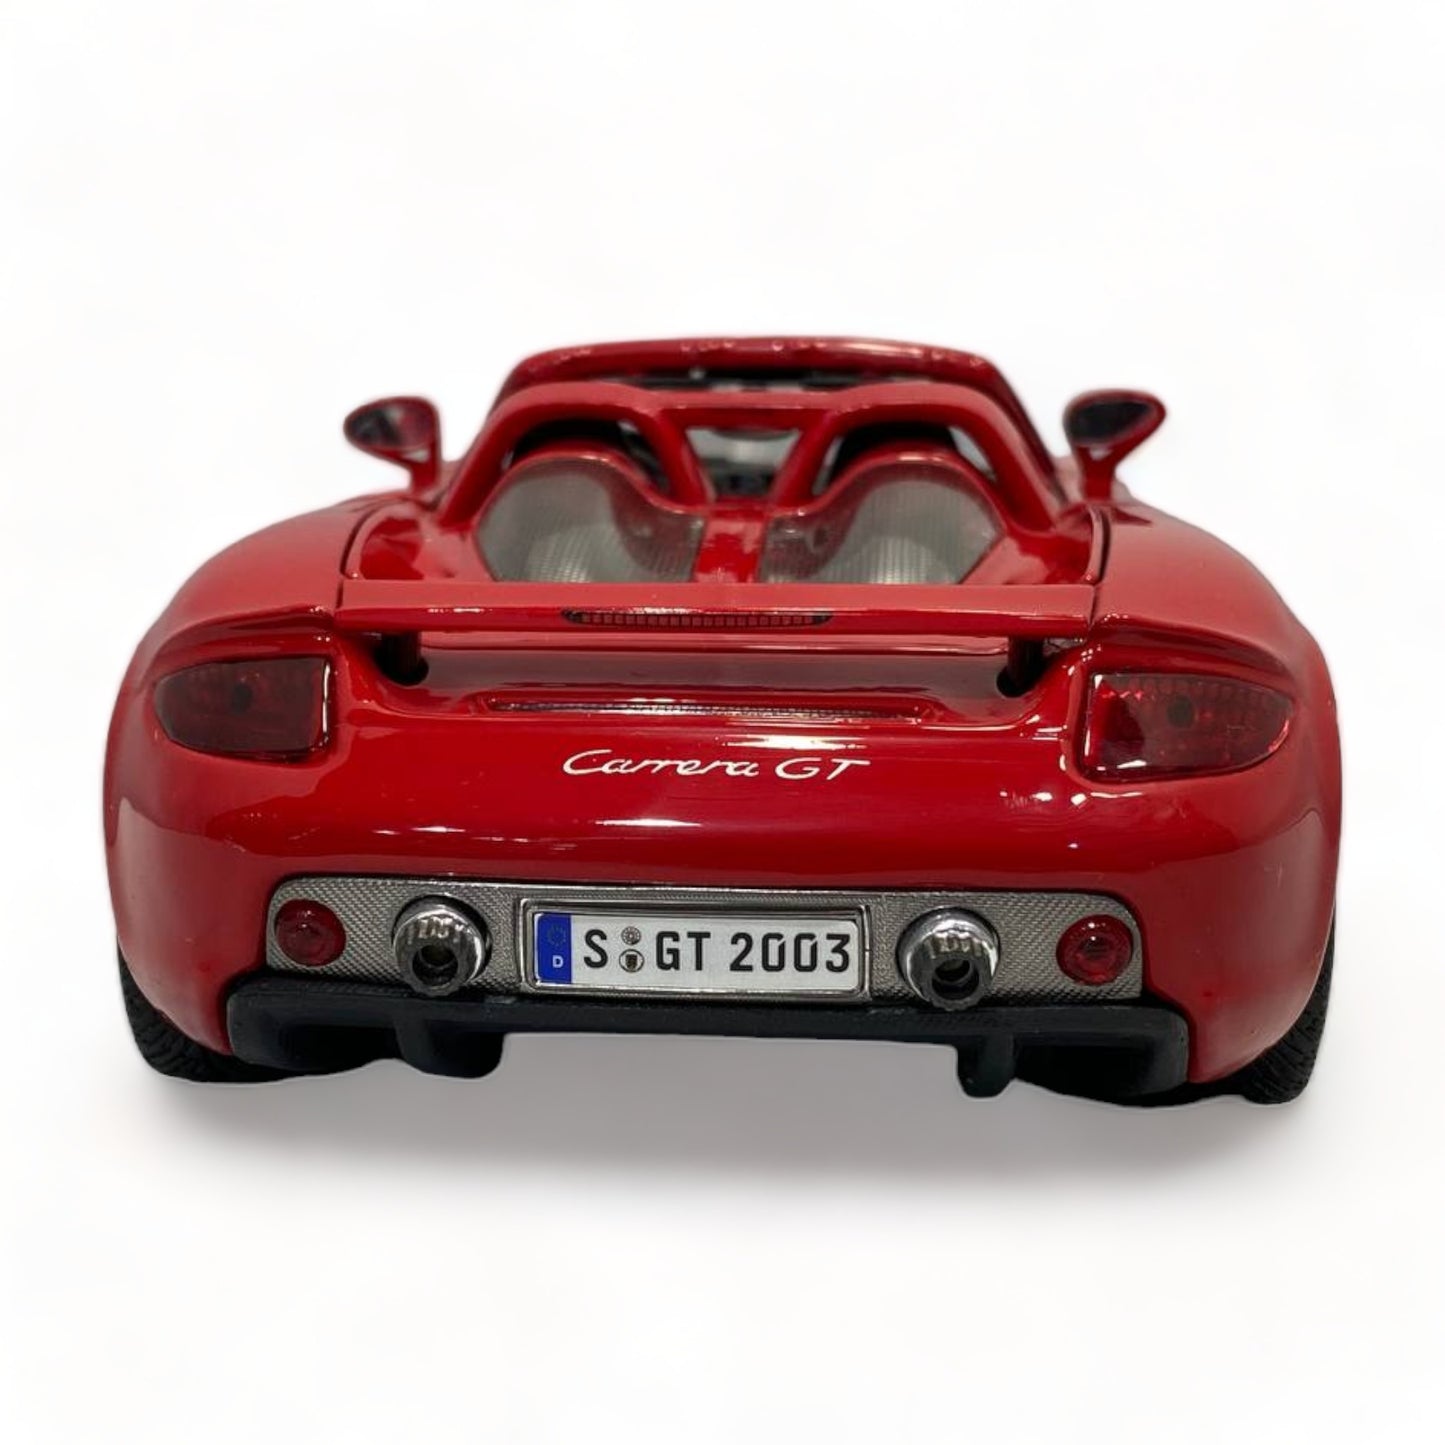 1/18 Diecast Maisto Porsche Carrera GT RED Scale Model Car|Sold in Dturman.com Dubai UAE.